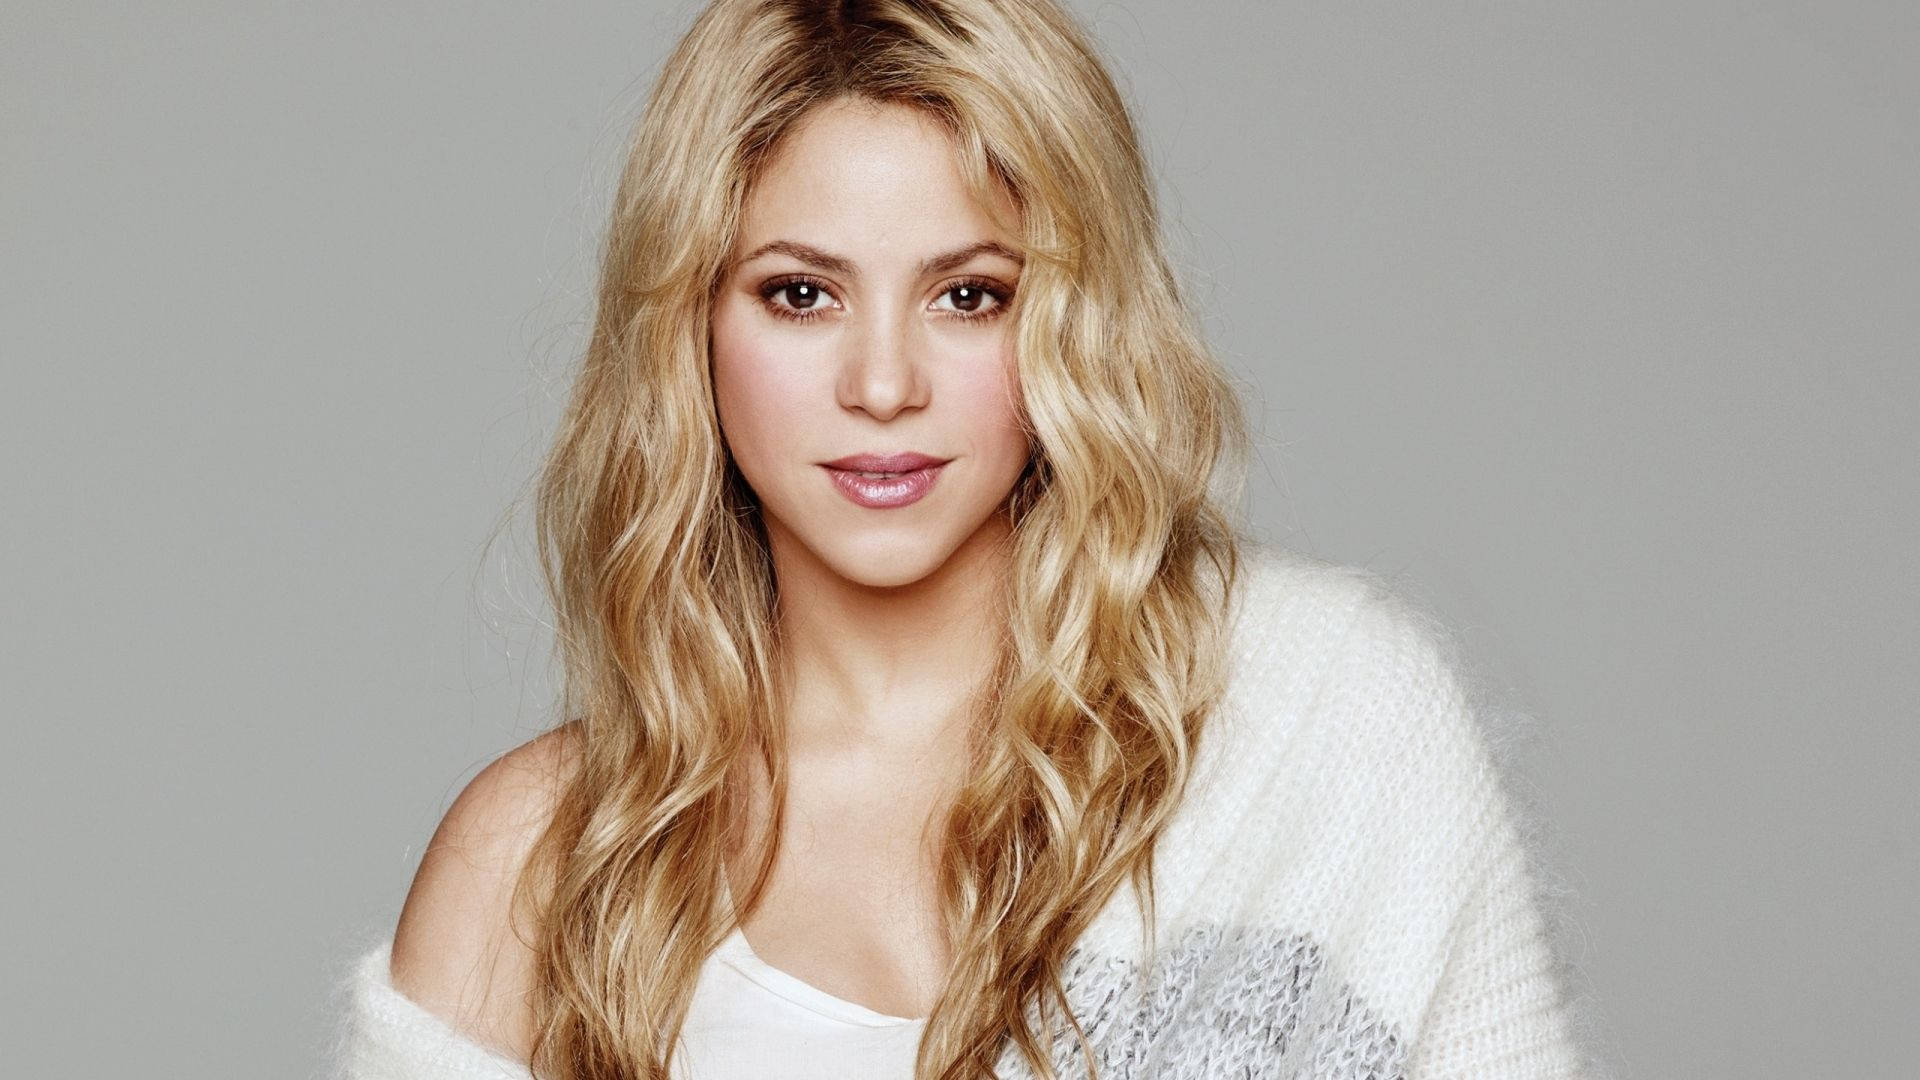 Shakirawollpullover Wallpaper